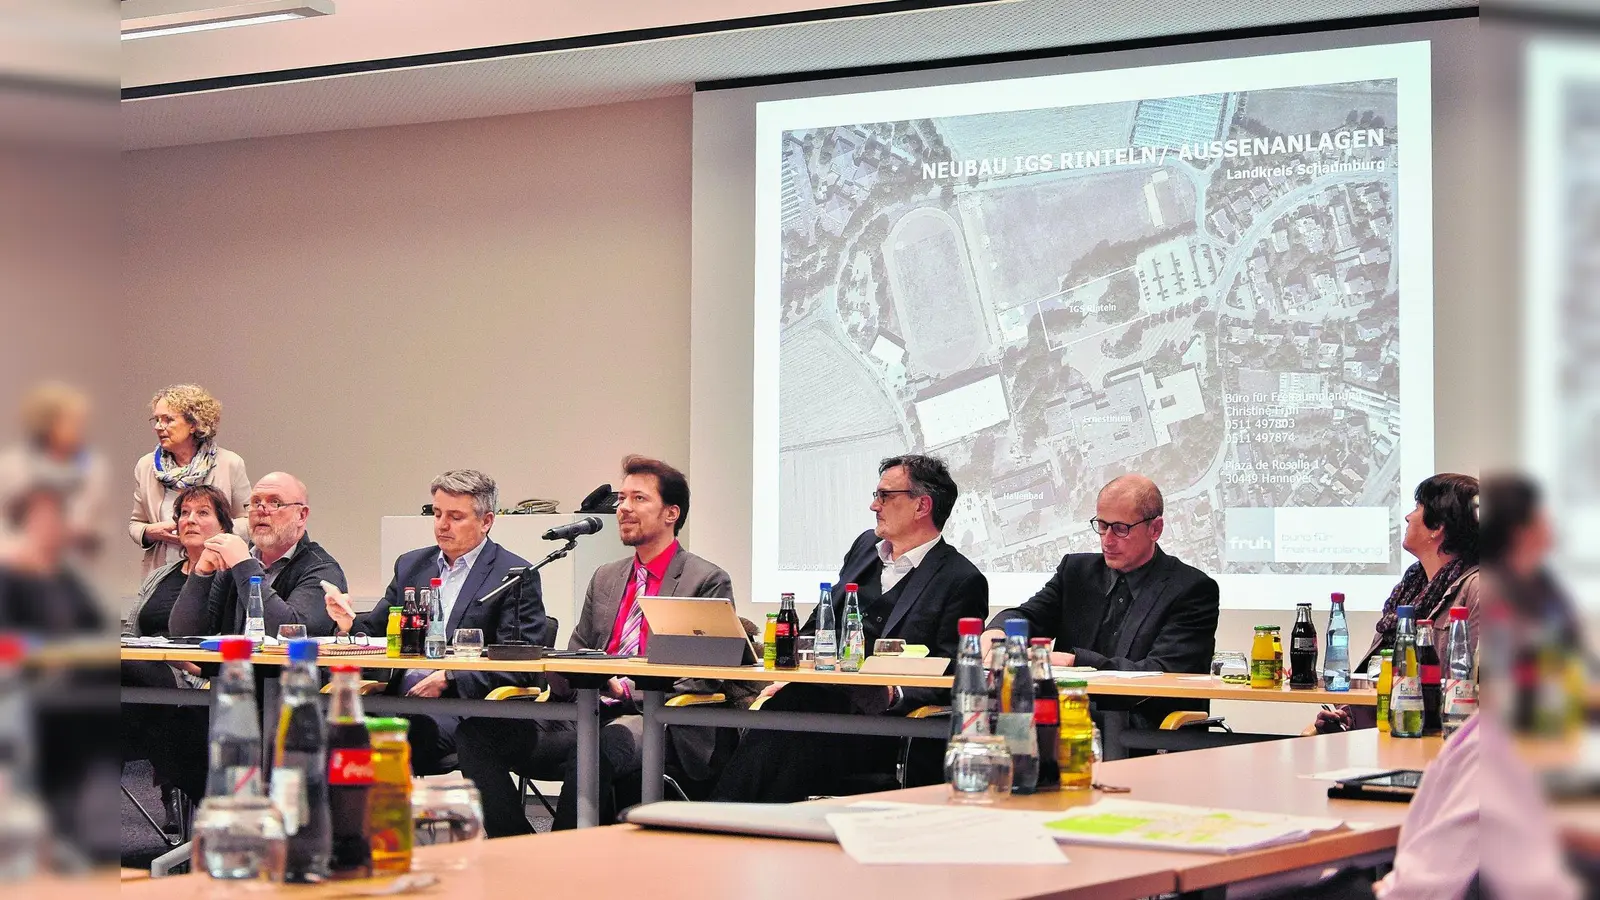 IGS-Neubau in finaler Planungsphase (Foto: ste)